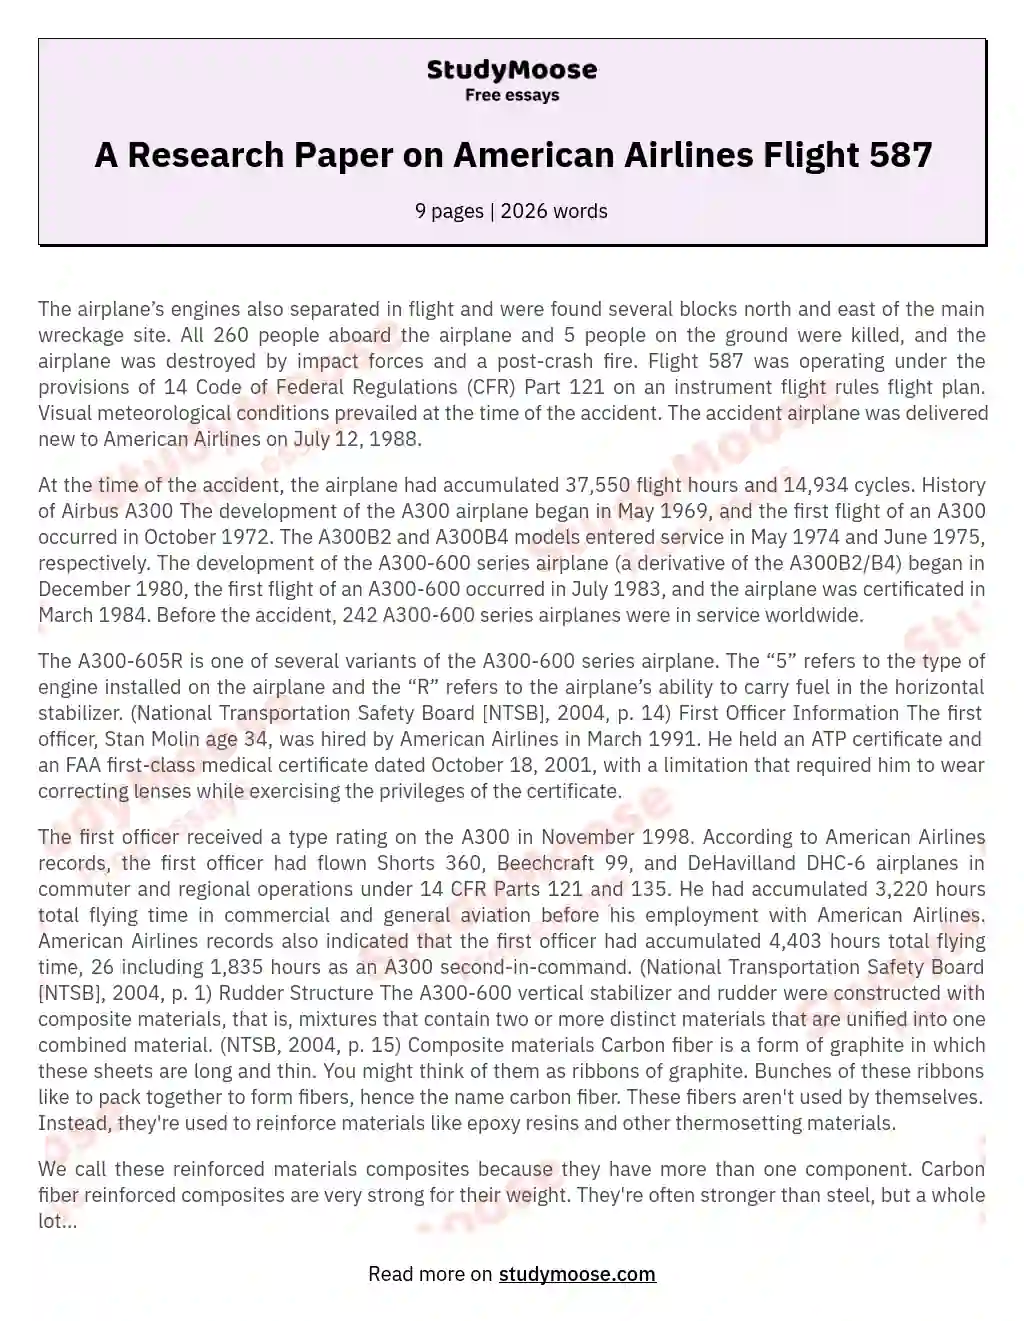 Tragic Crash of American Airlines Flight 587 essay